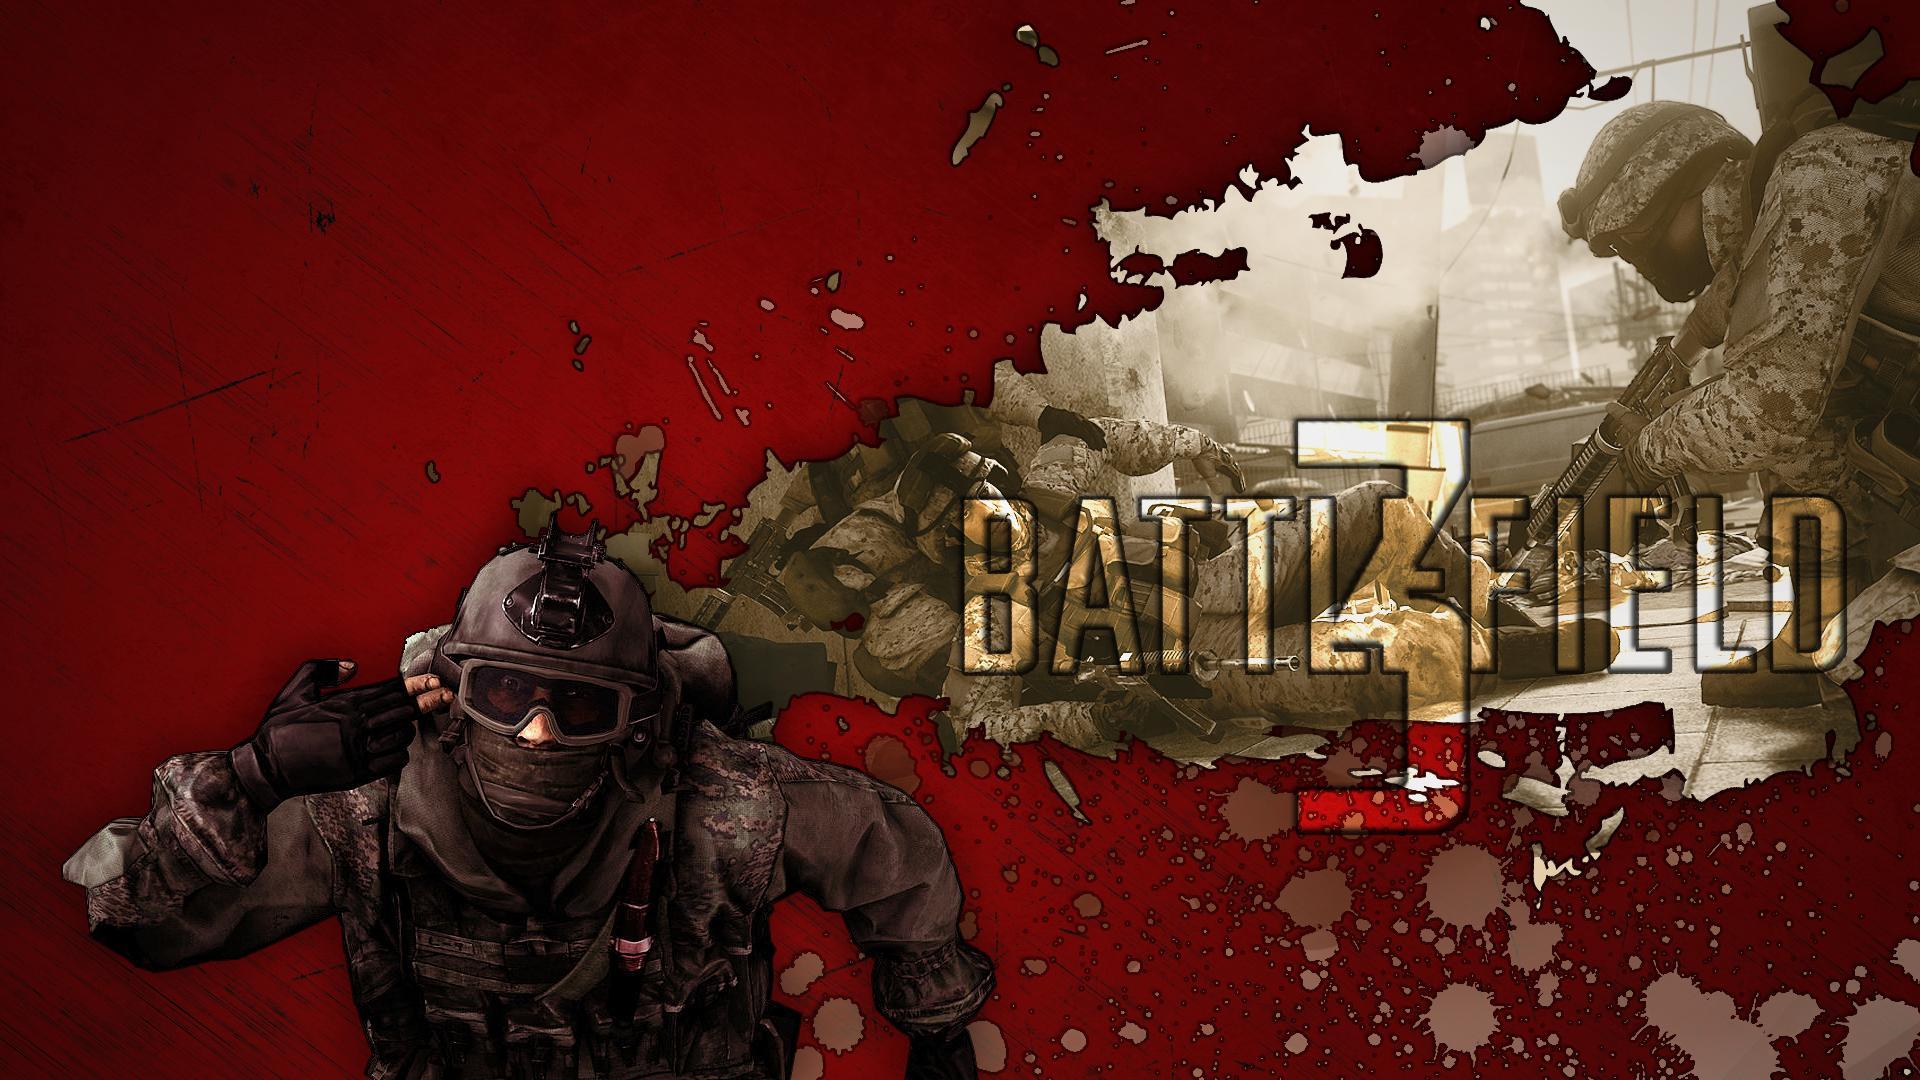 Battlefield 3 wallpapers Borderlands style! : battlefield3